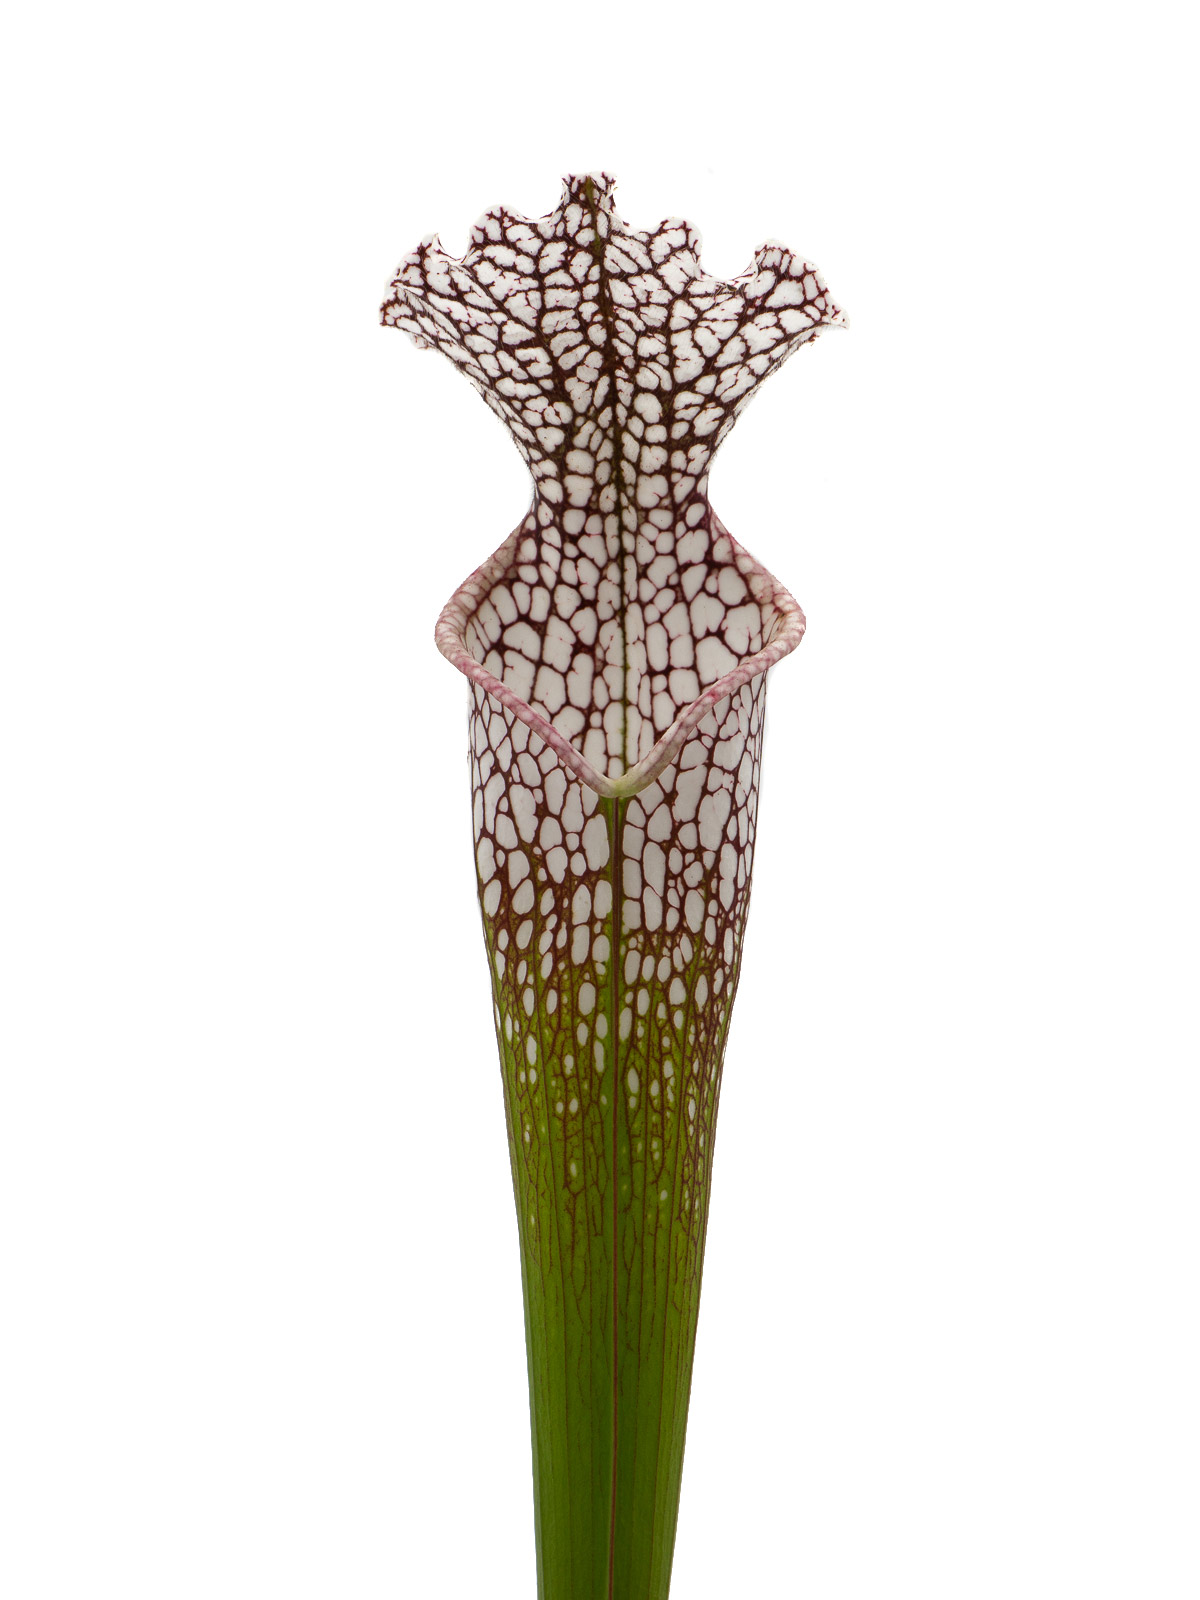 S. leucophylla - MK L65, large form, Marston Exotics